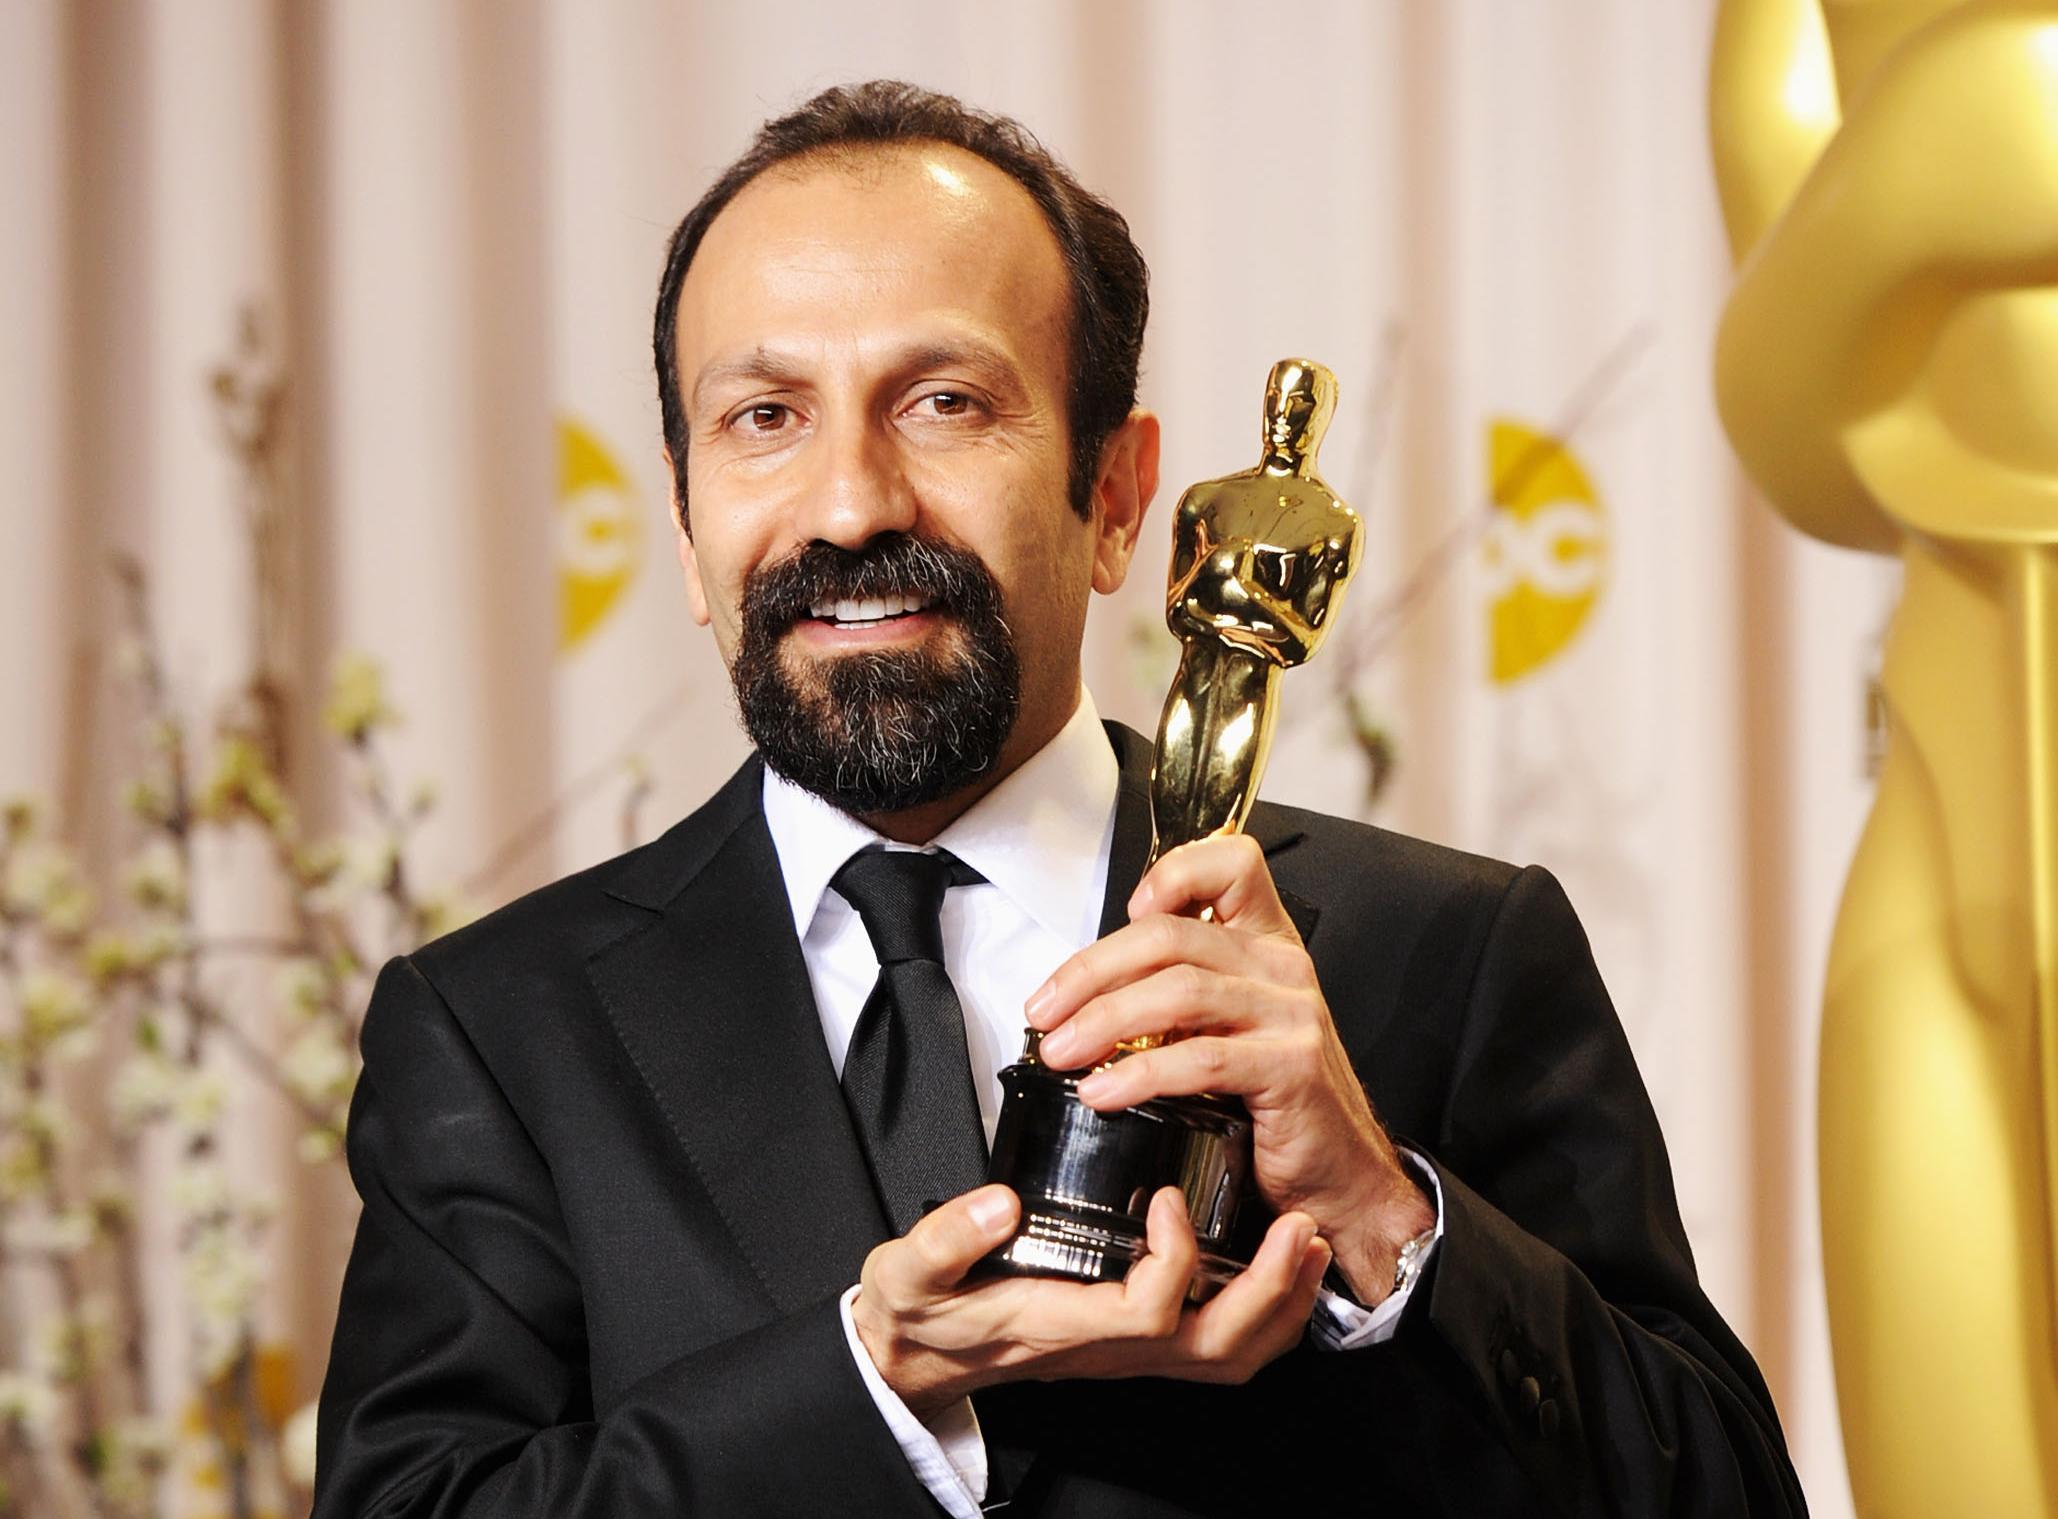 Filmmaker Asghar Farhadi wins Best Foreign Film Award for A Separation in 2012